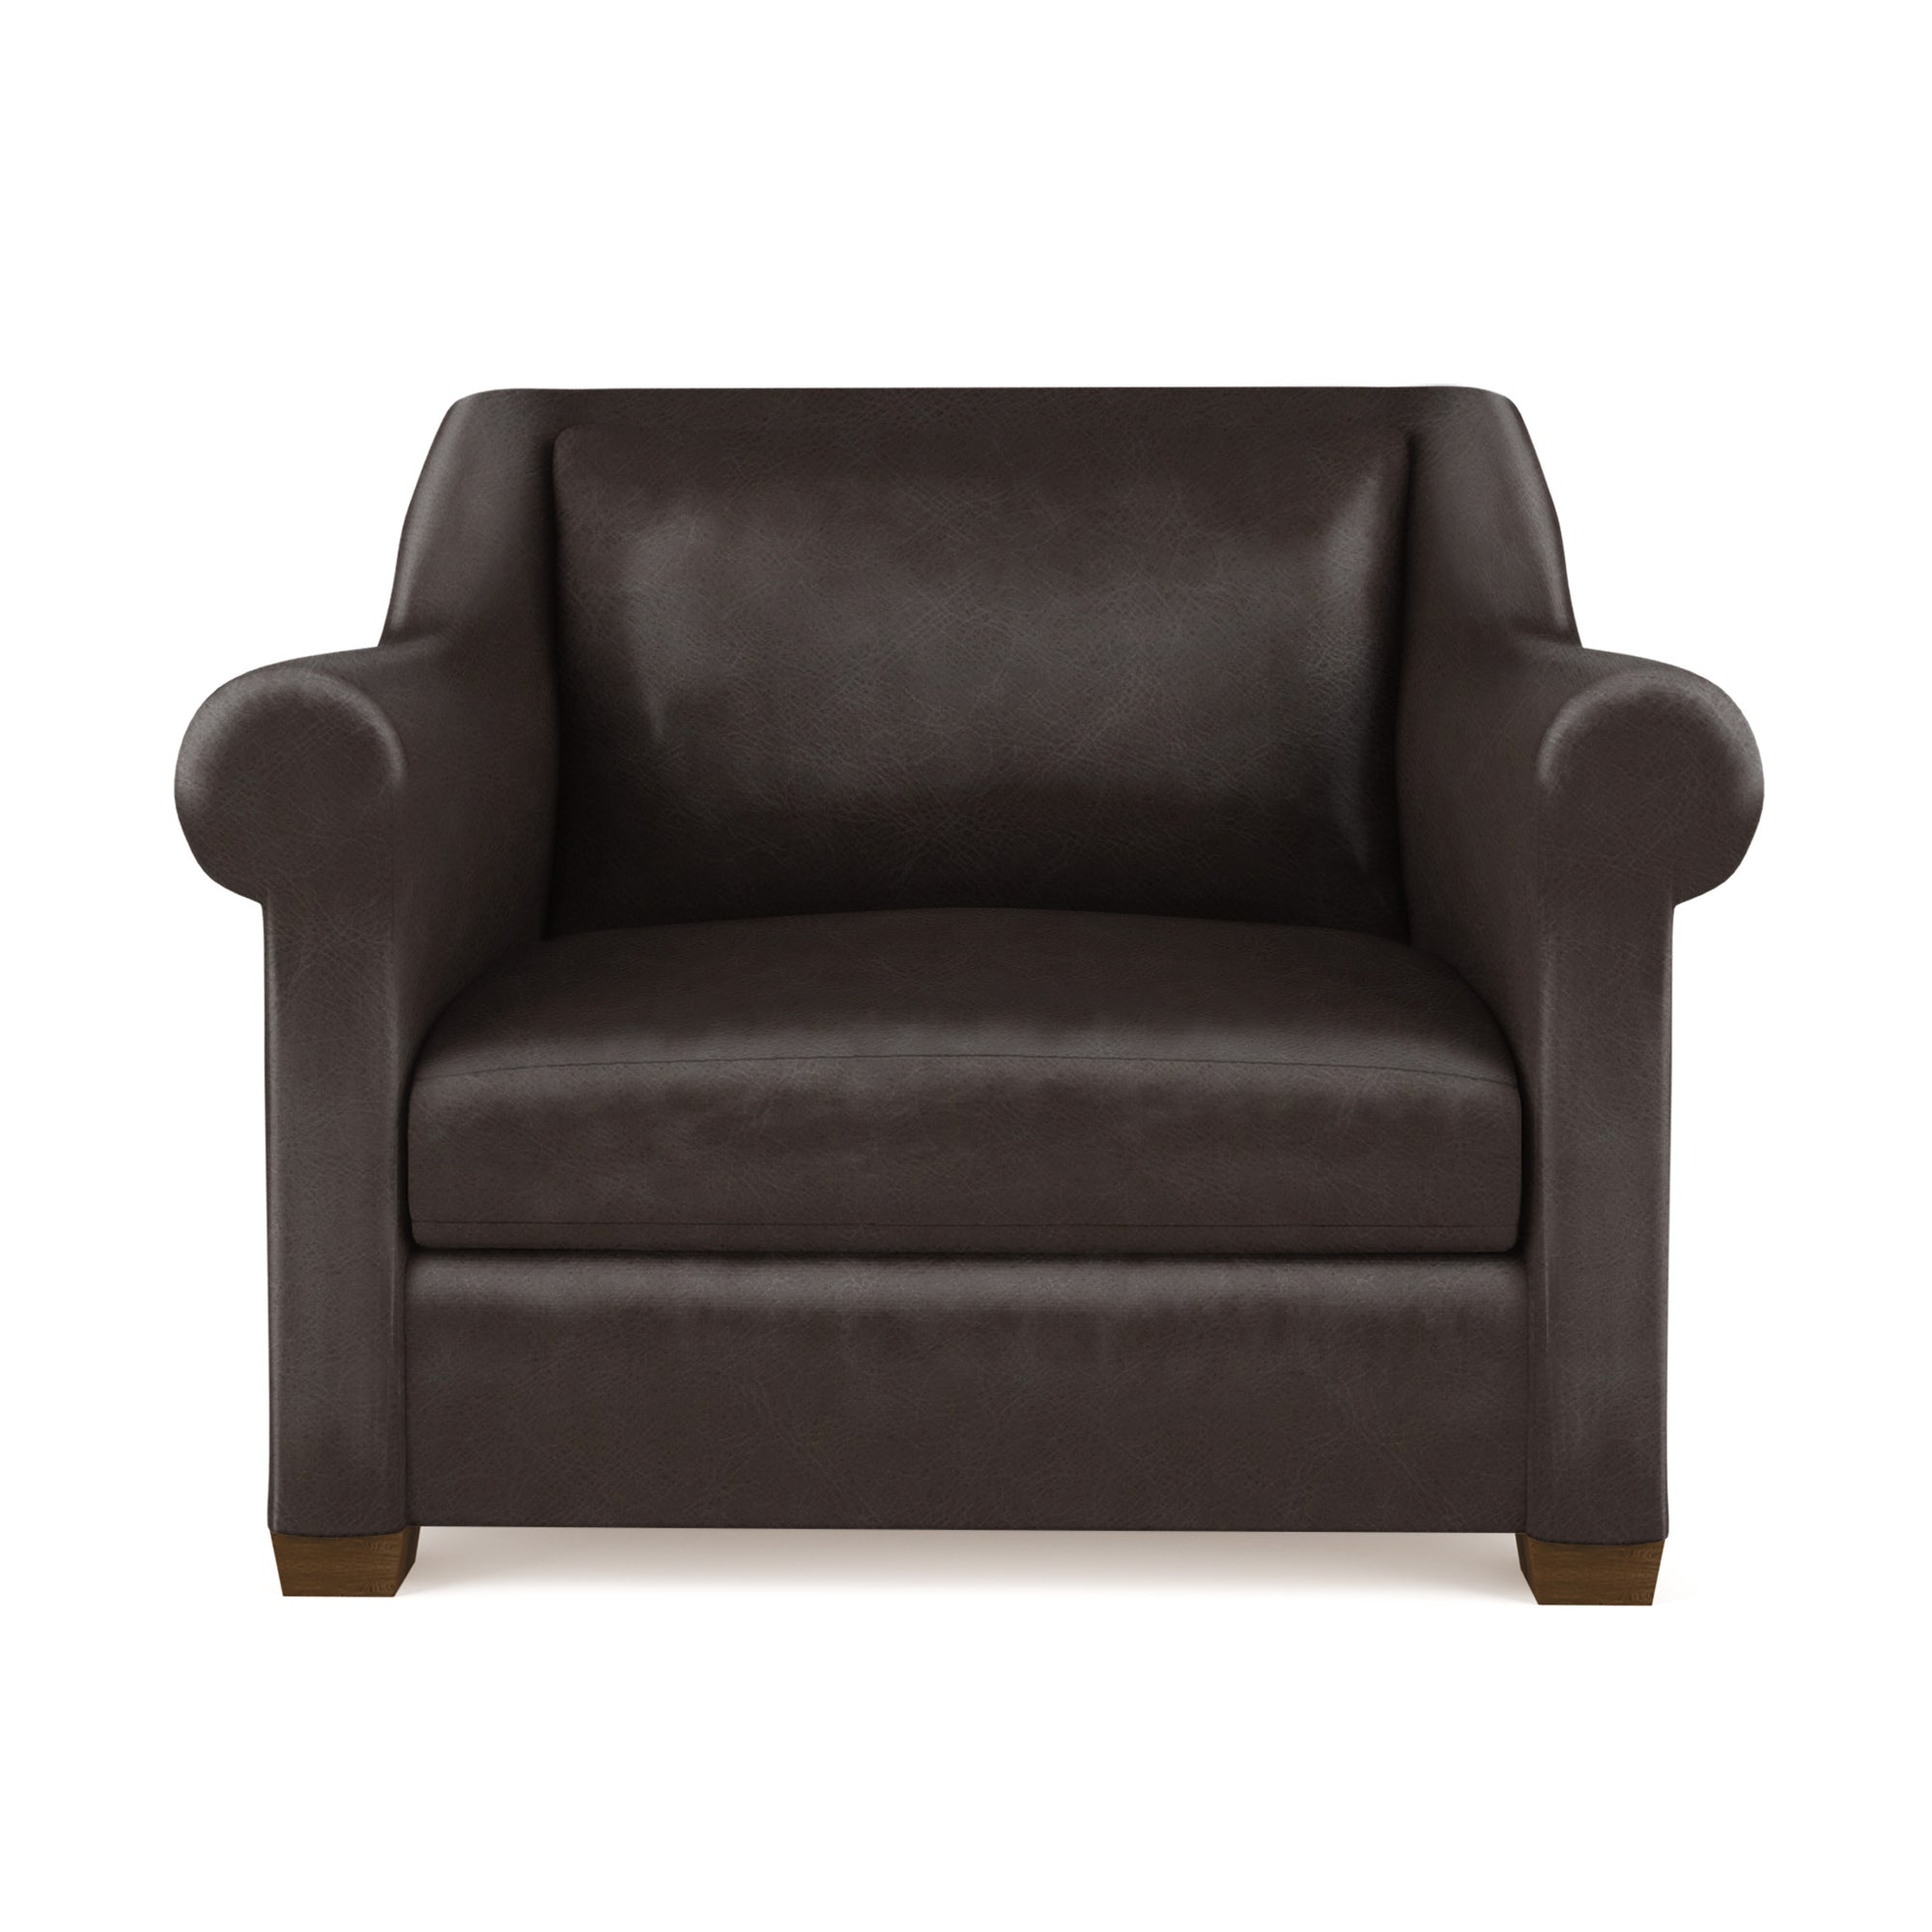 Thompson Chair - Chocolate Vintage Leather